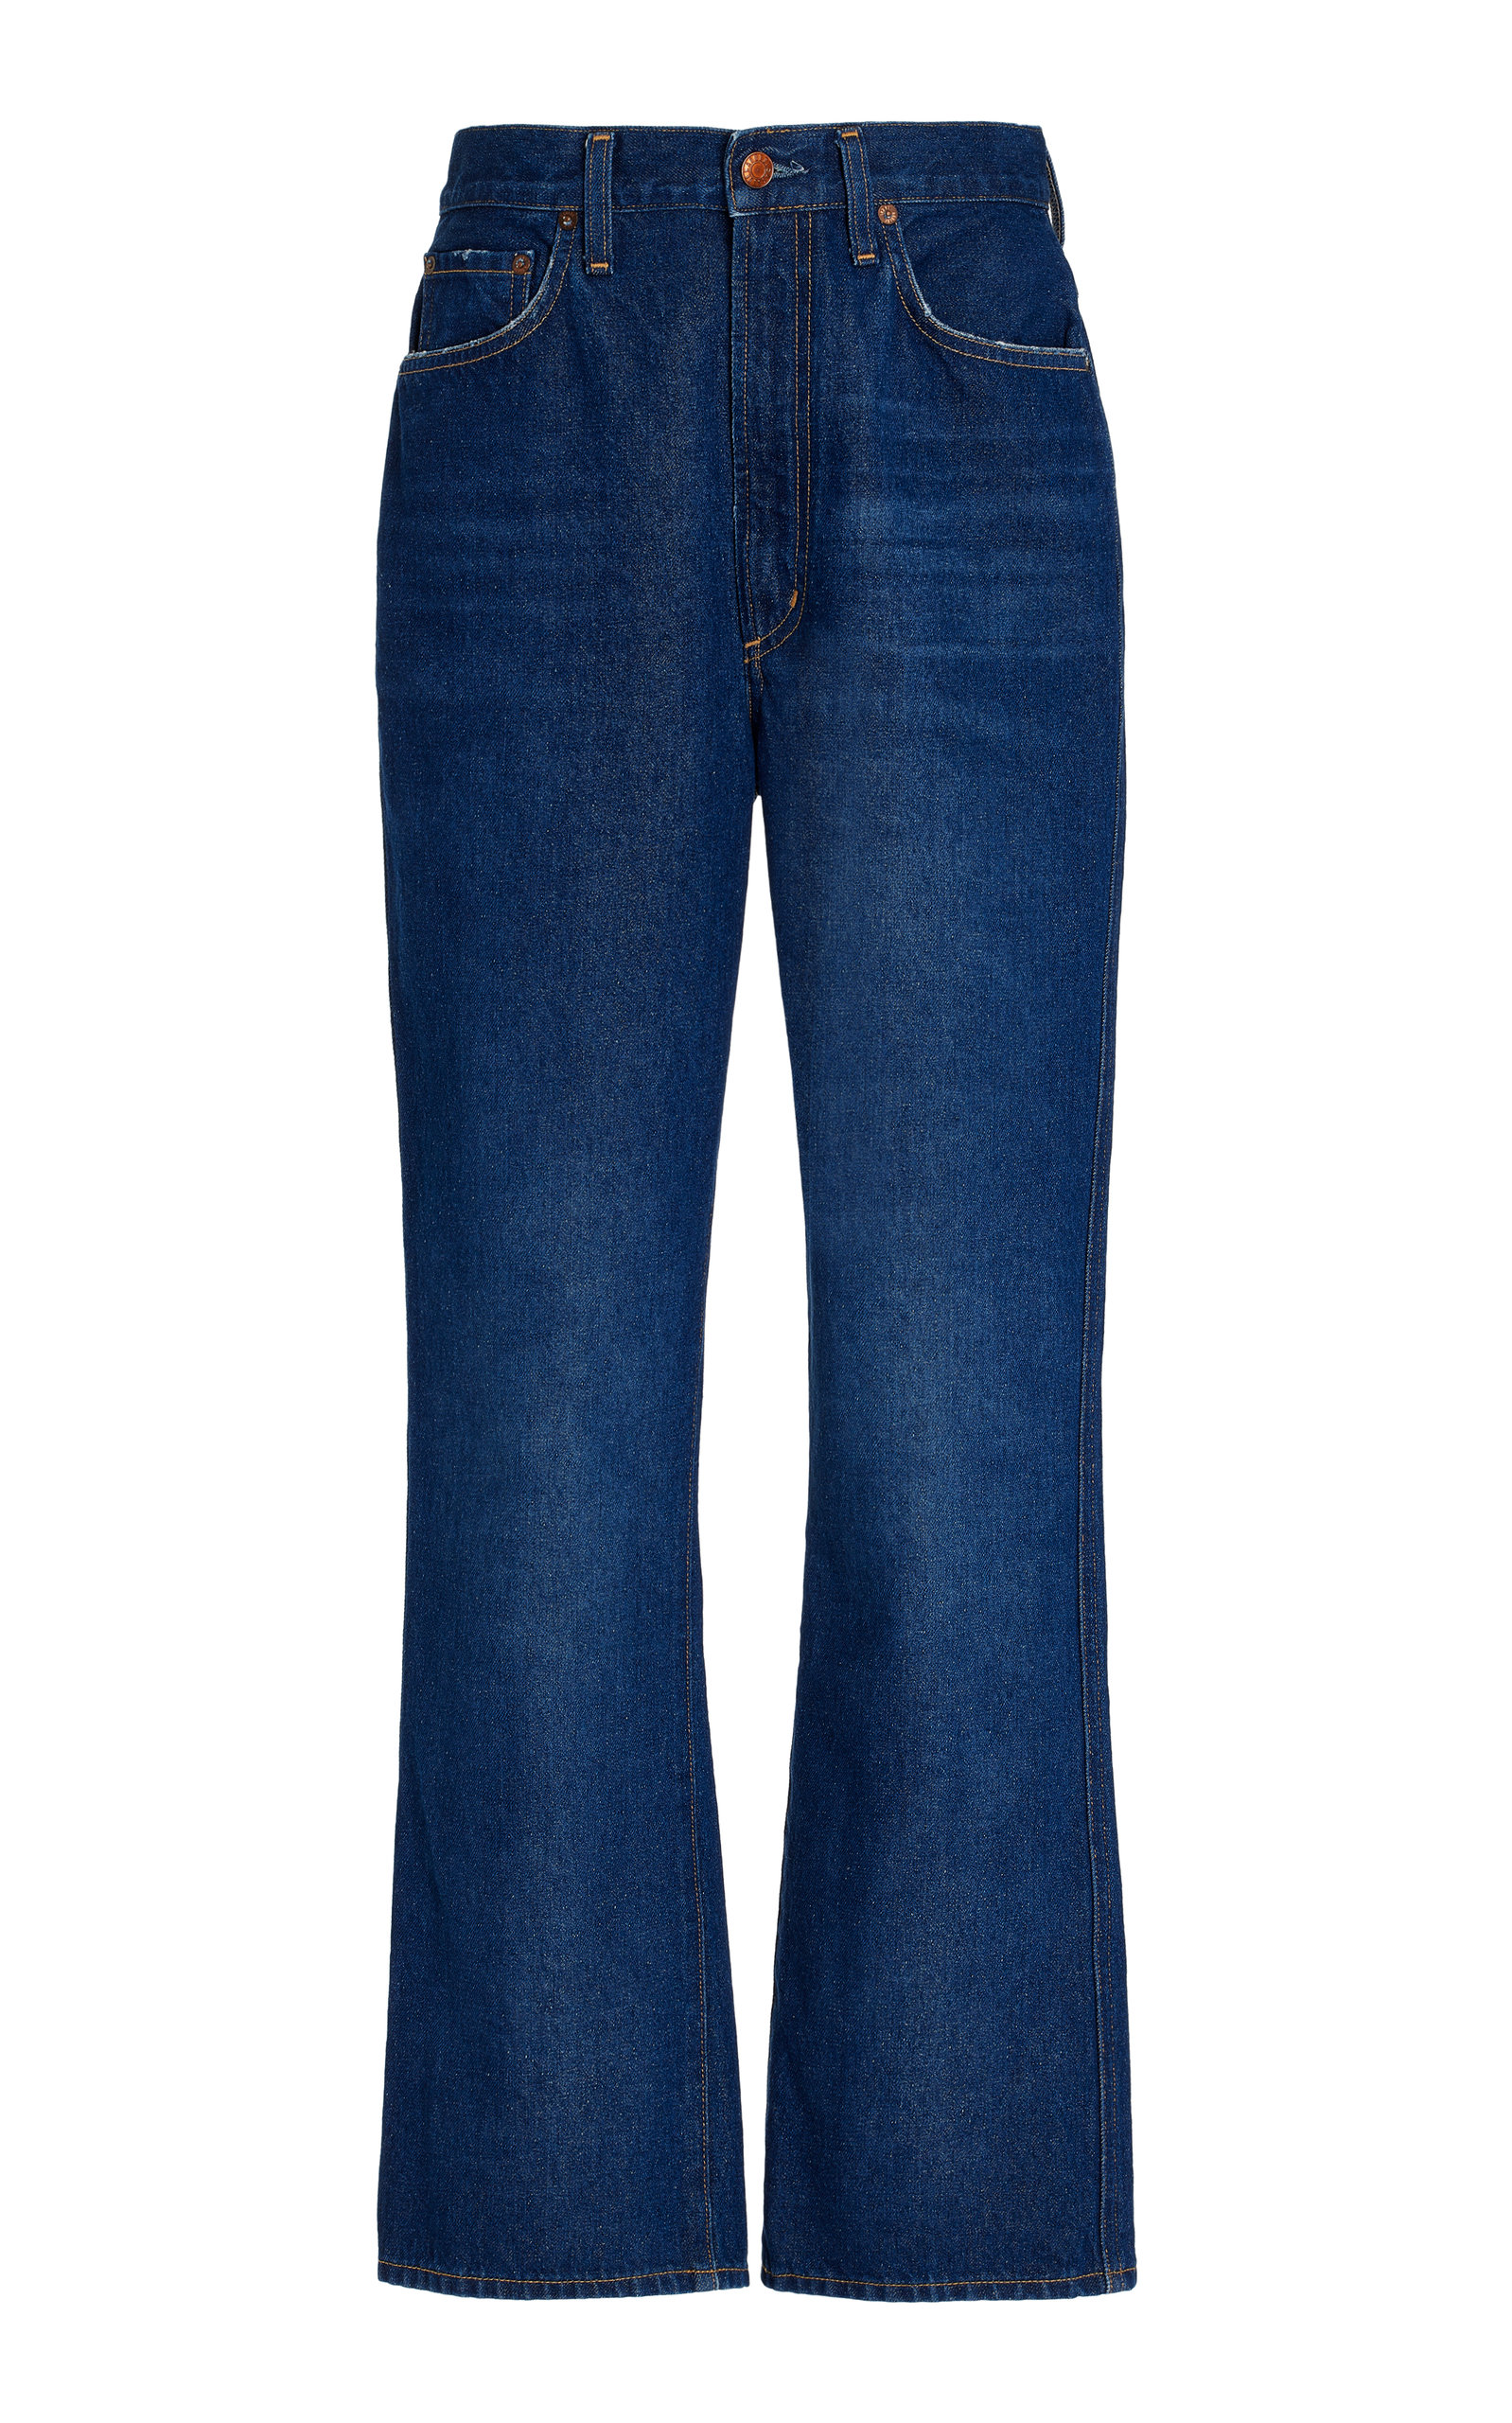 Agolde - Rigid Pinch-Waist Kick Flare Cropped Jeans - Medium Wash - 26 - Moda Operandi